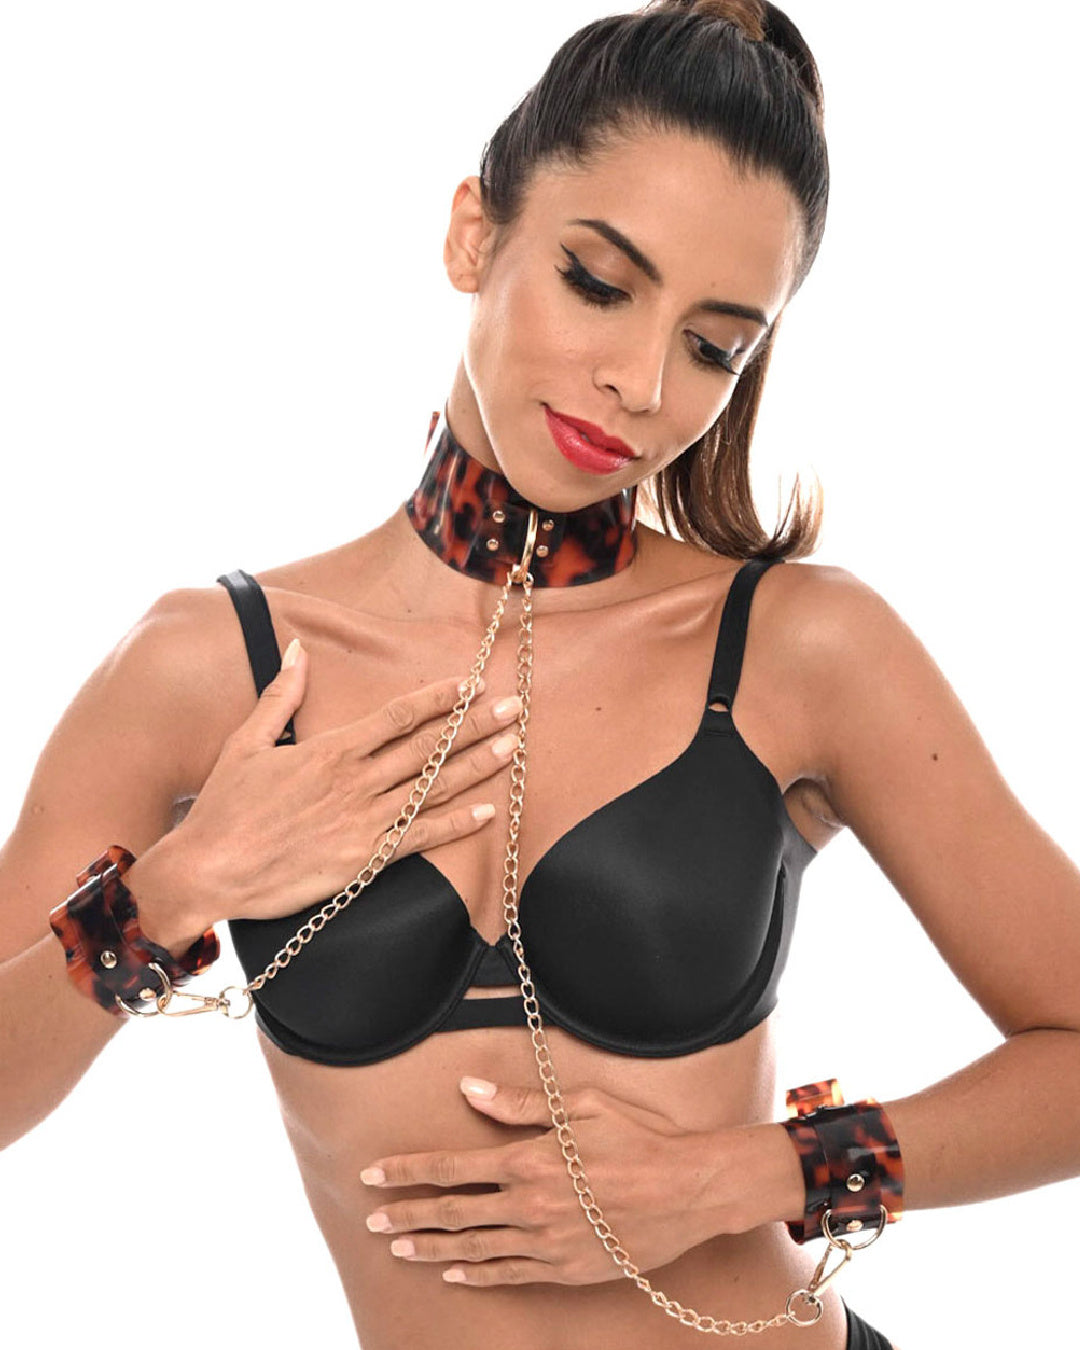 Model wearing Sincerely Amber Adjustable Neck and Wrist Restraints